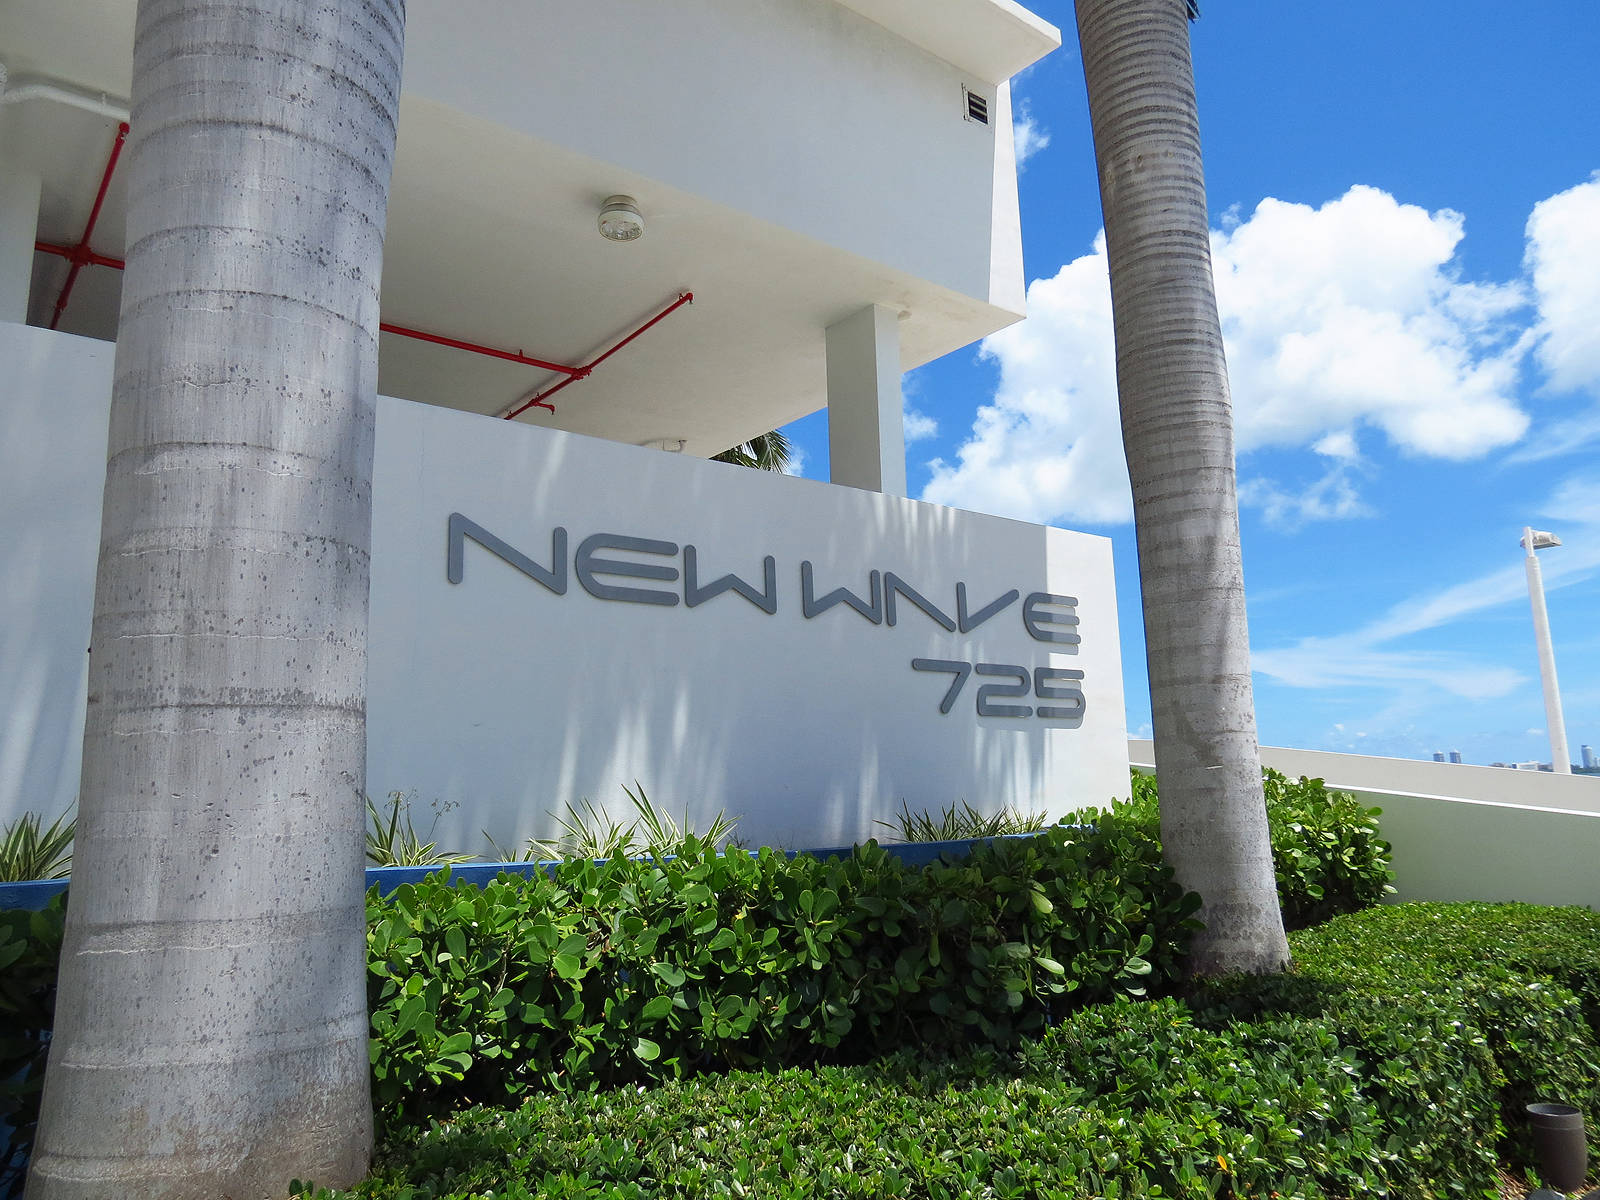 New-Wave-Miami-Street-Entrance